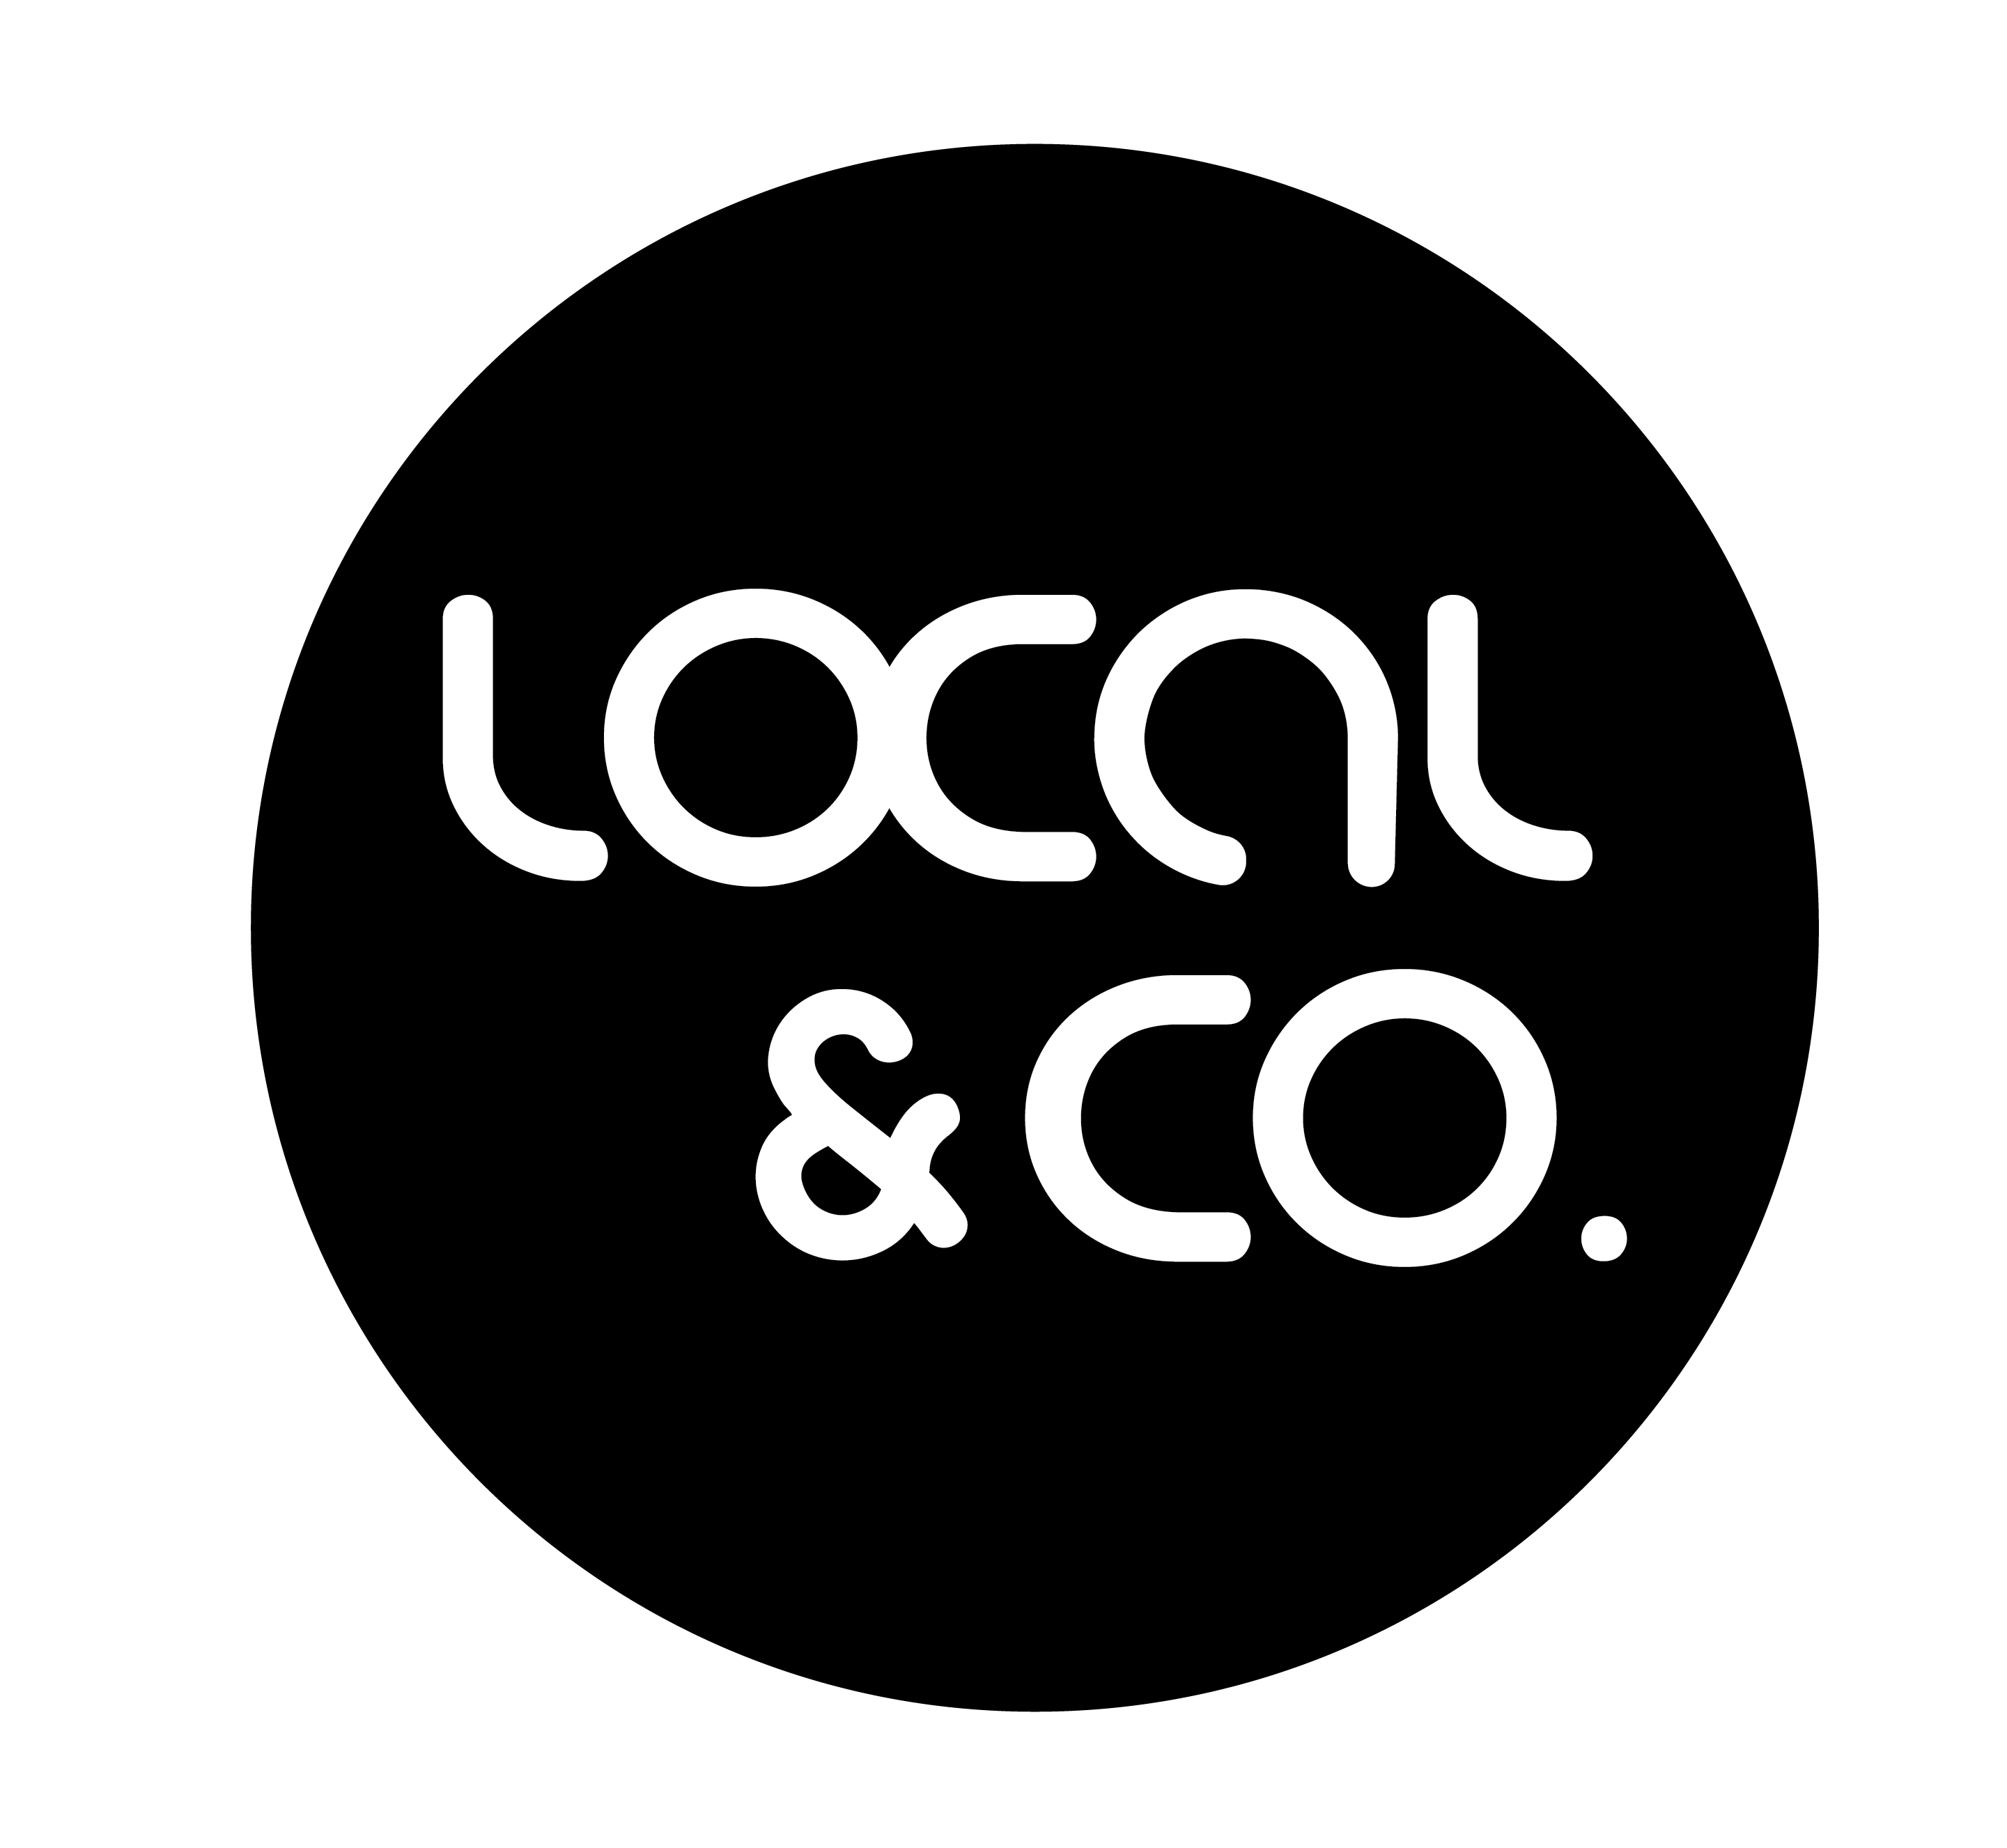 Local & Co